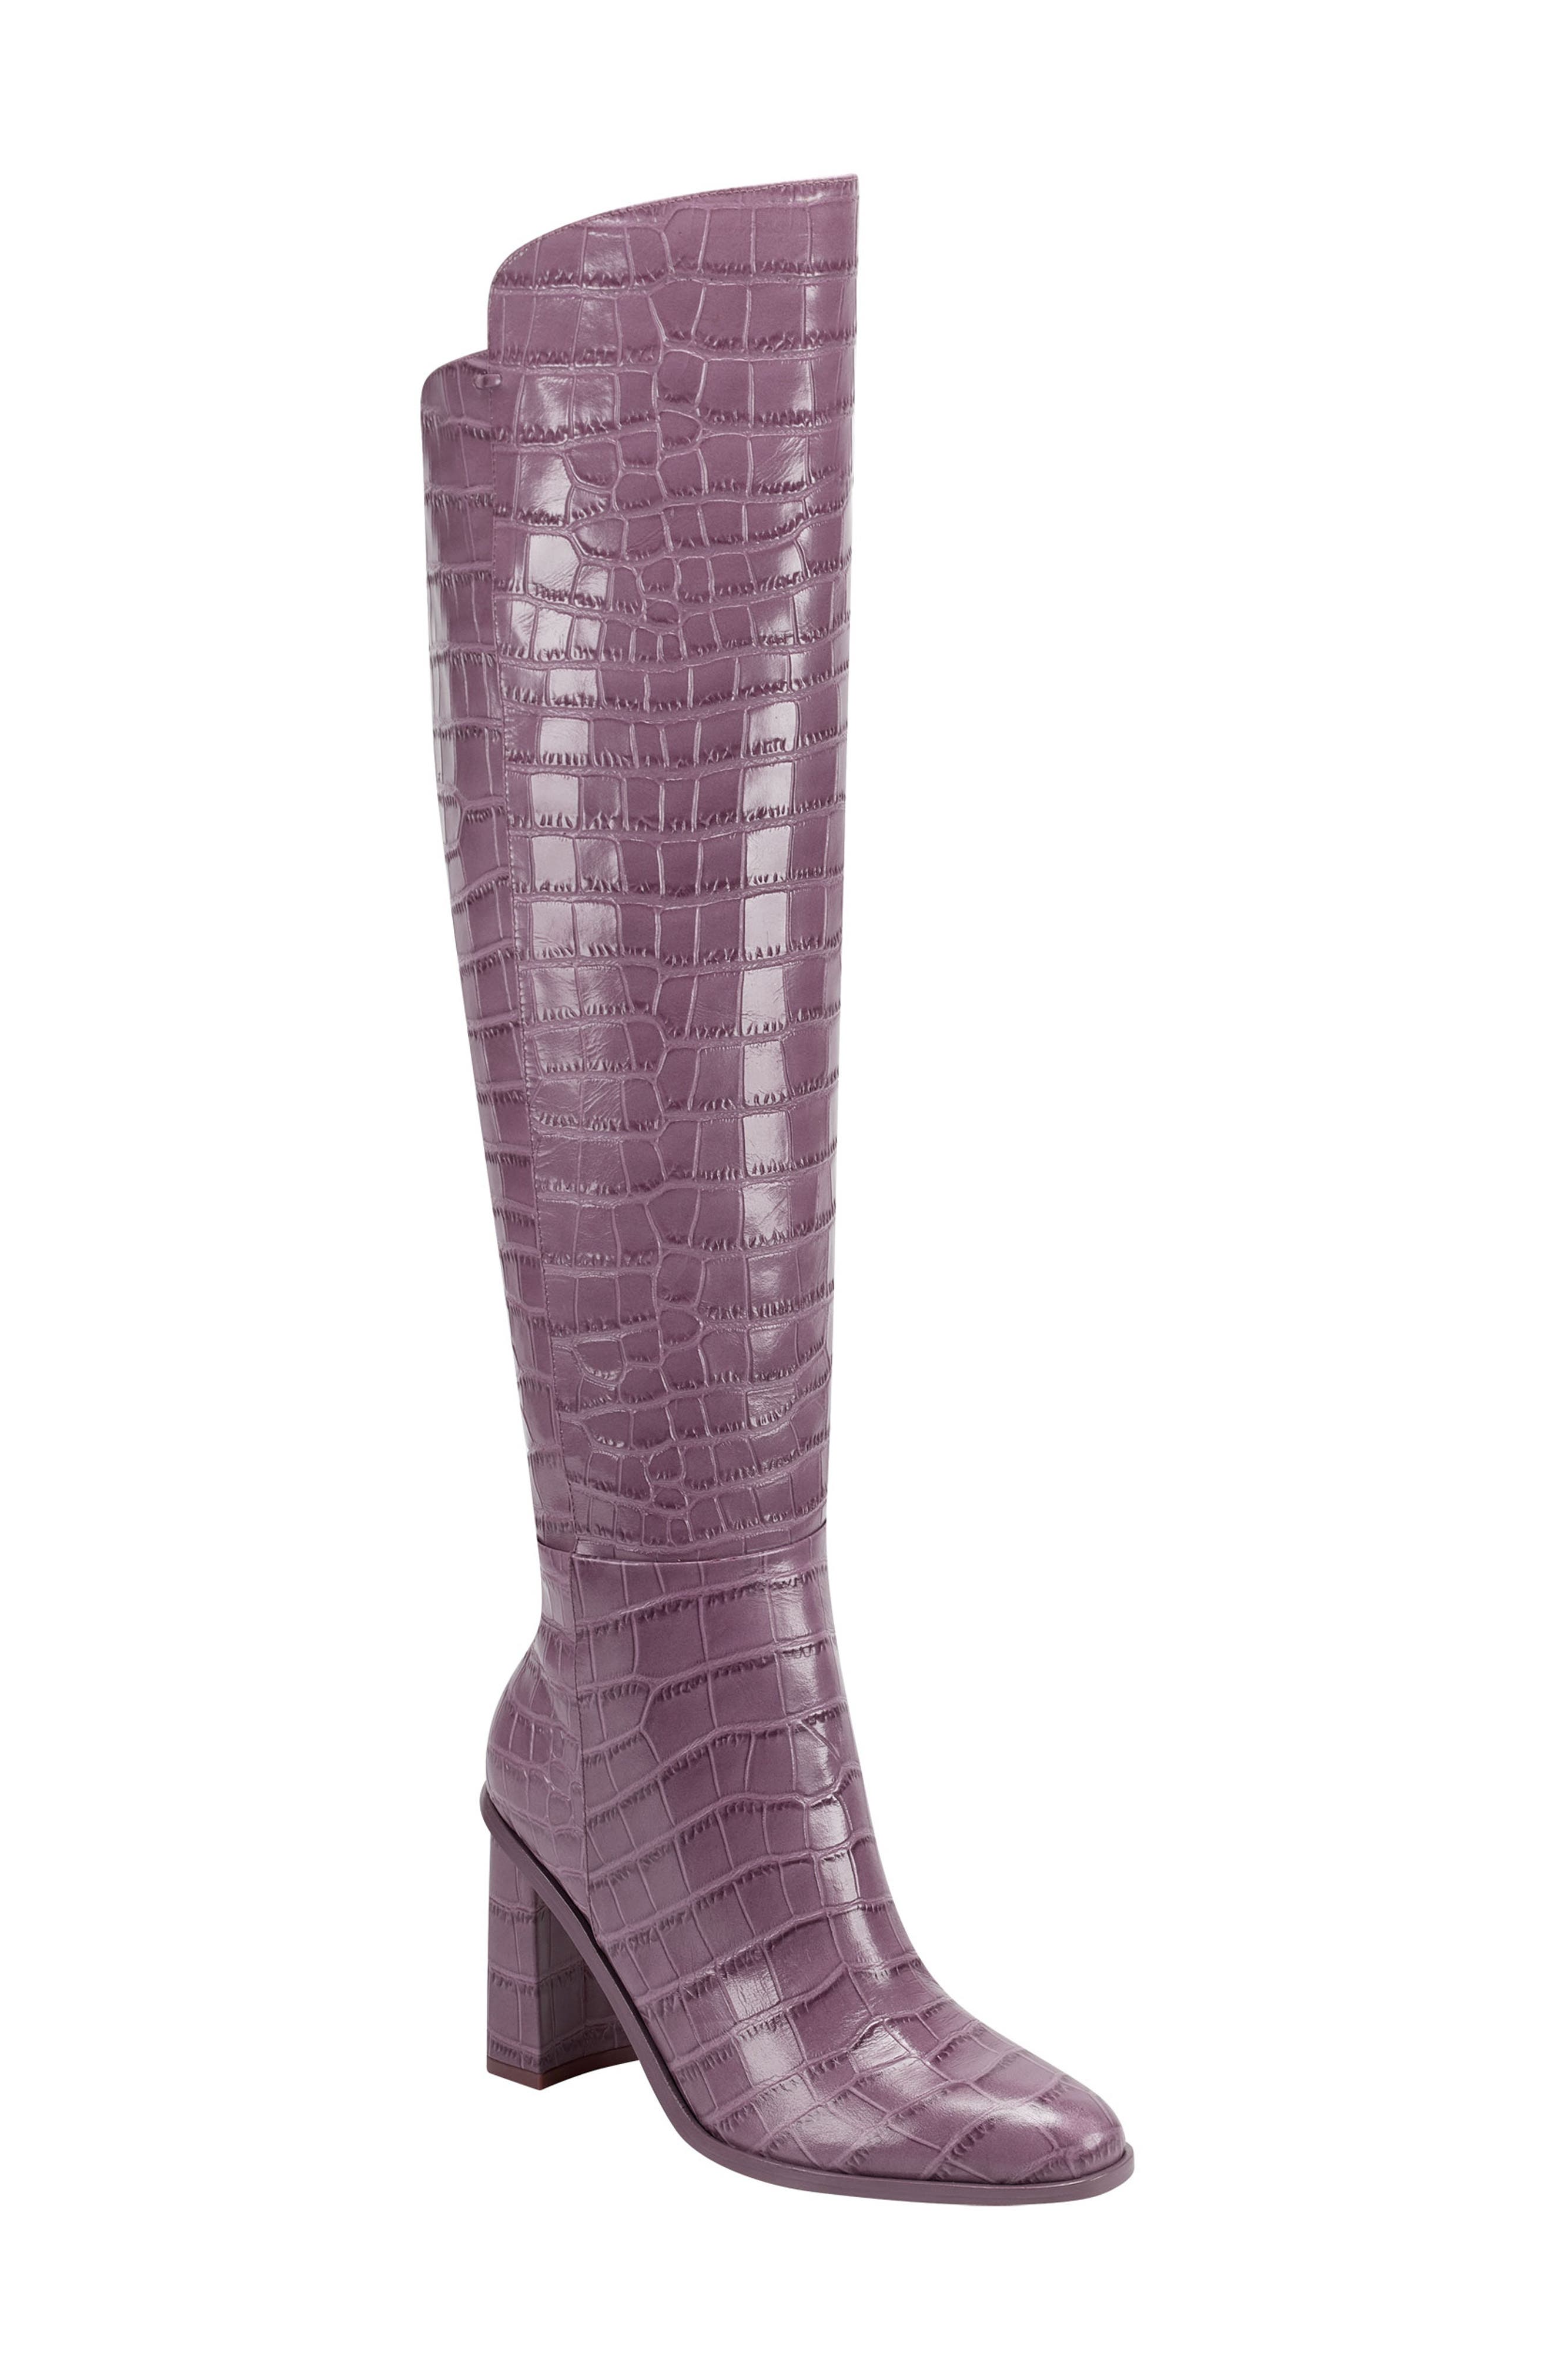 purple croc boots